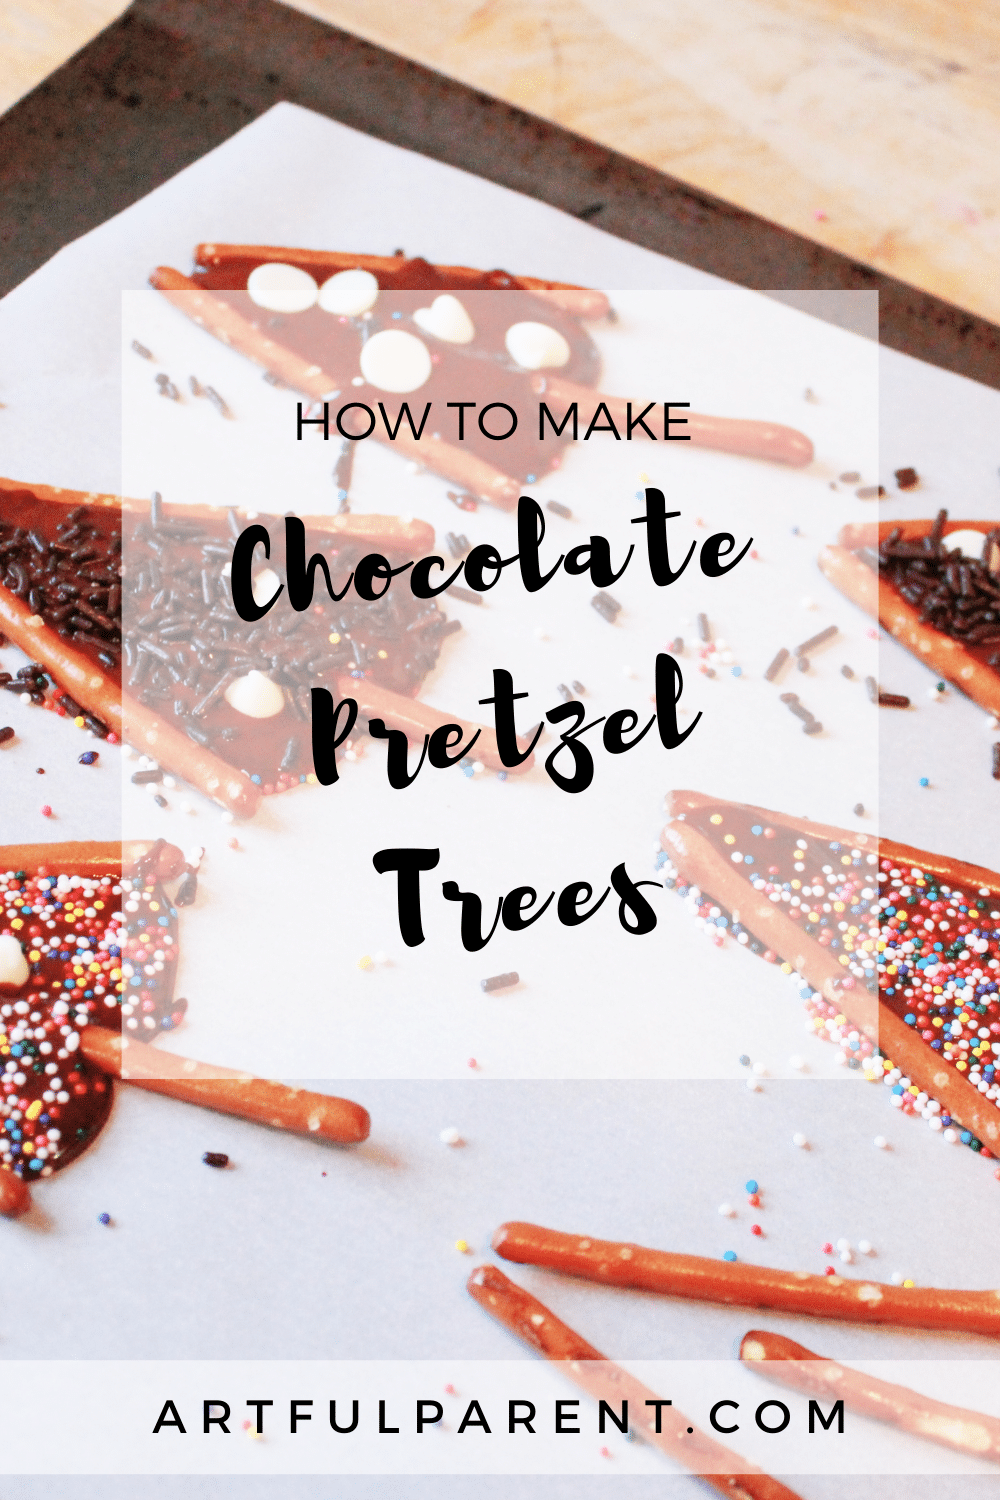 How to Make Chocolate Pretzel Trees